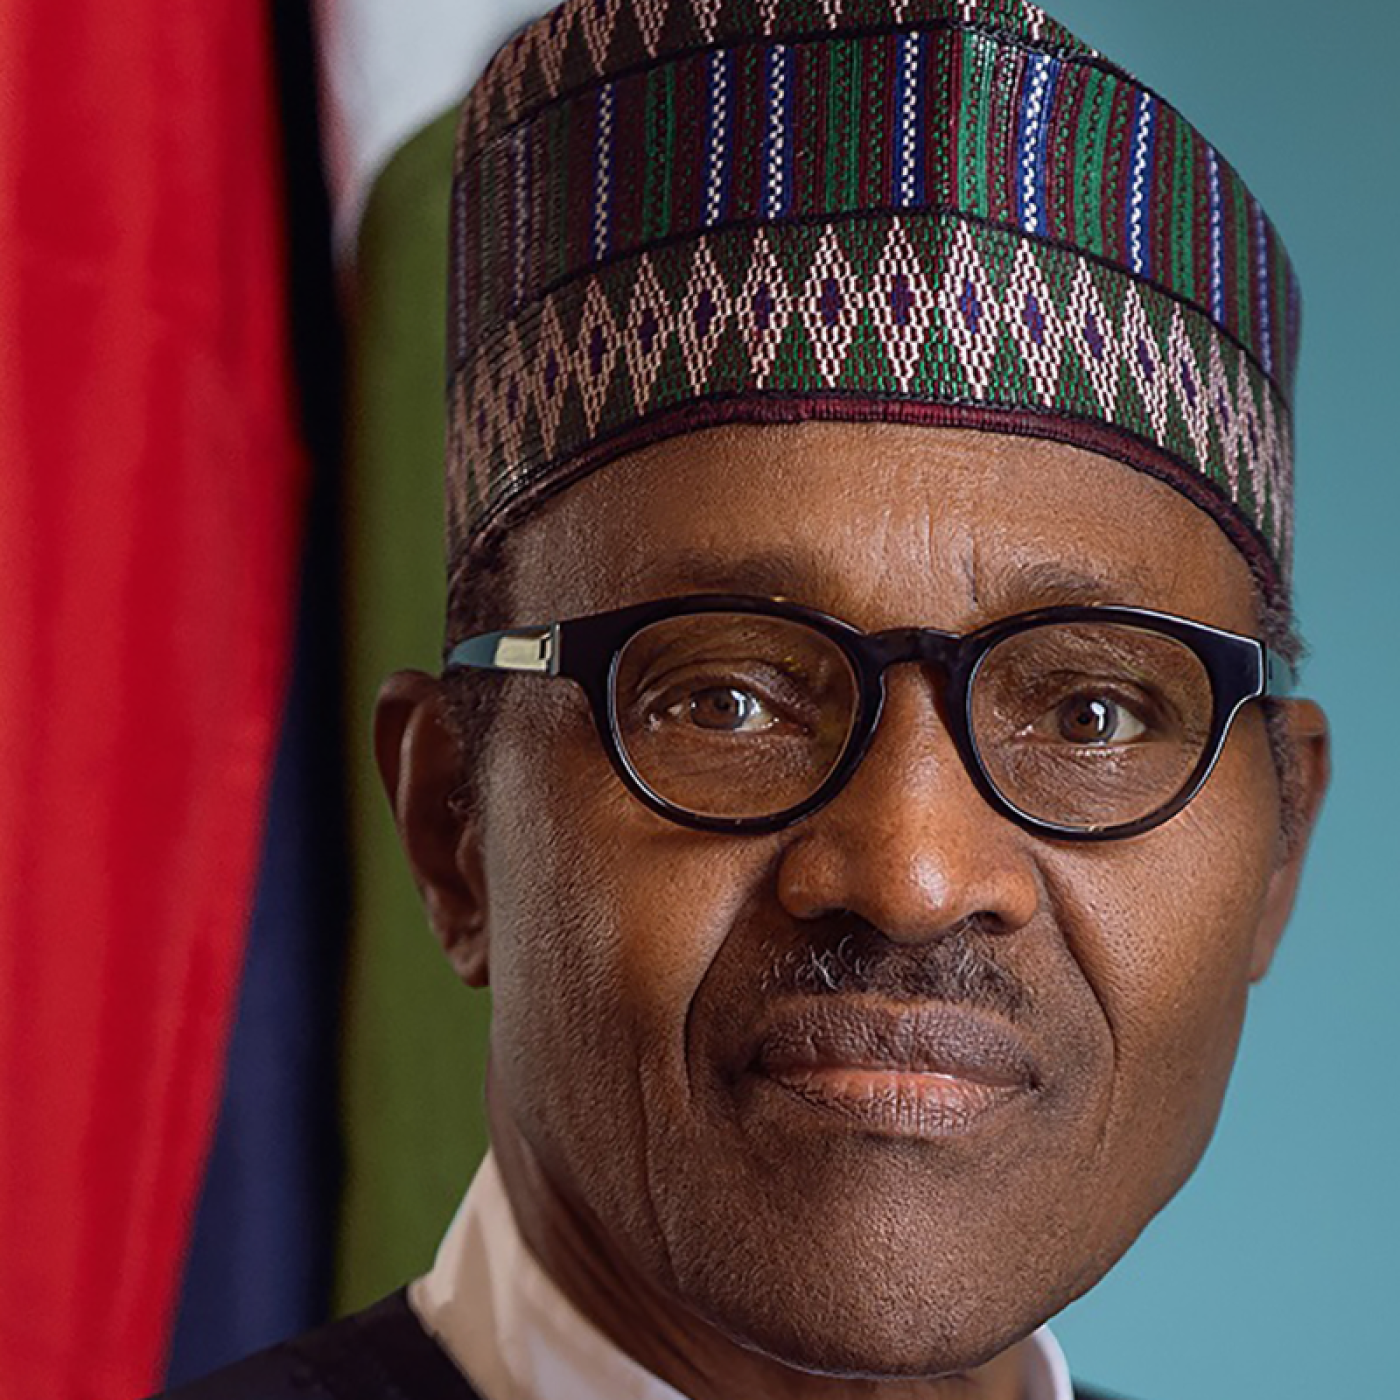 Image of President Buhari of Nigeria